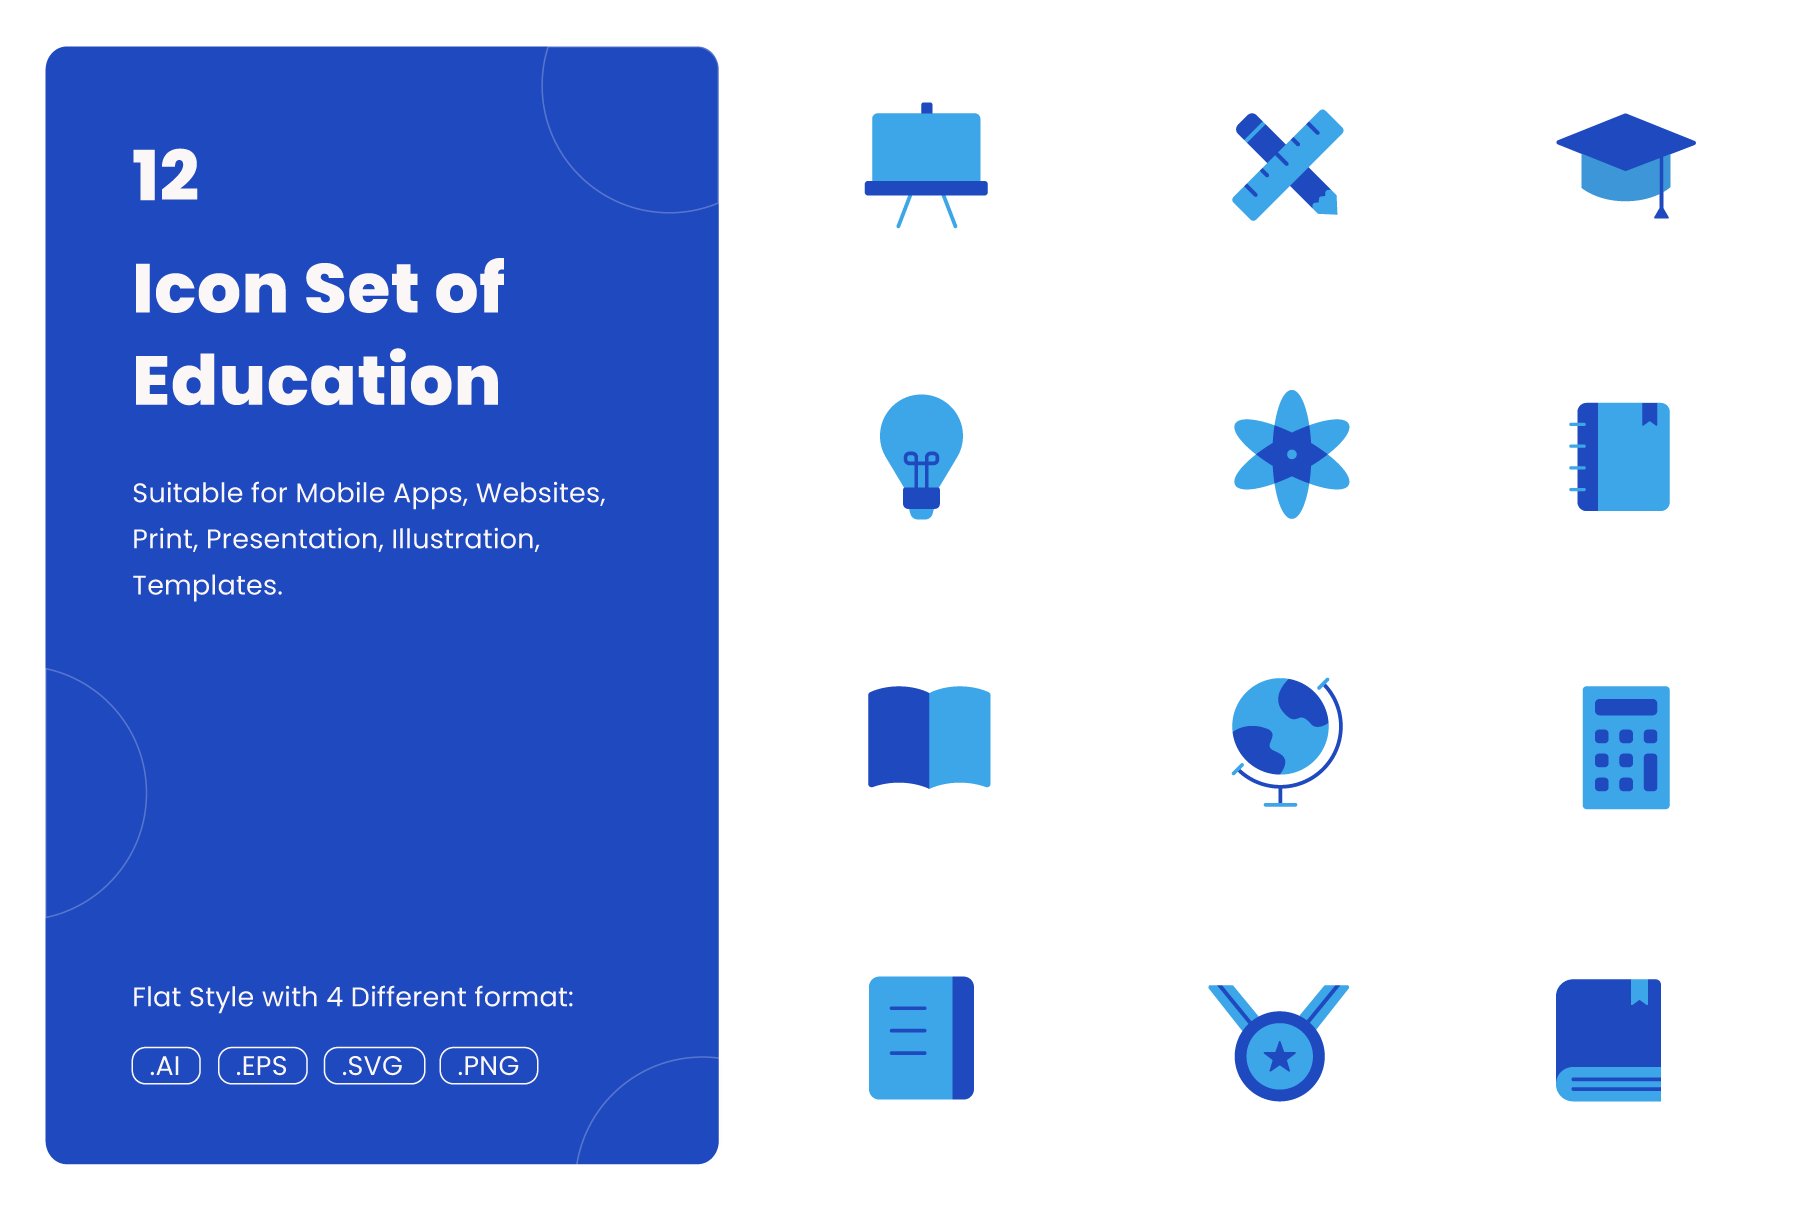 12 Icon Set Education cover image.